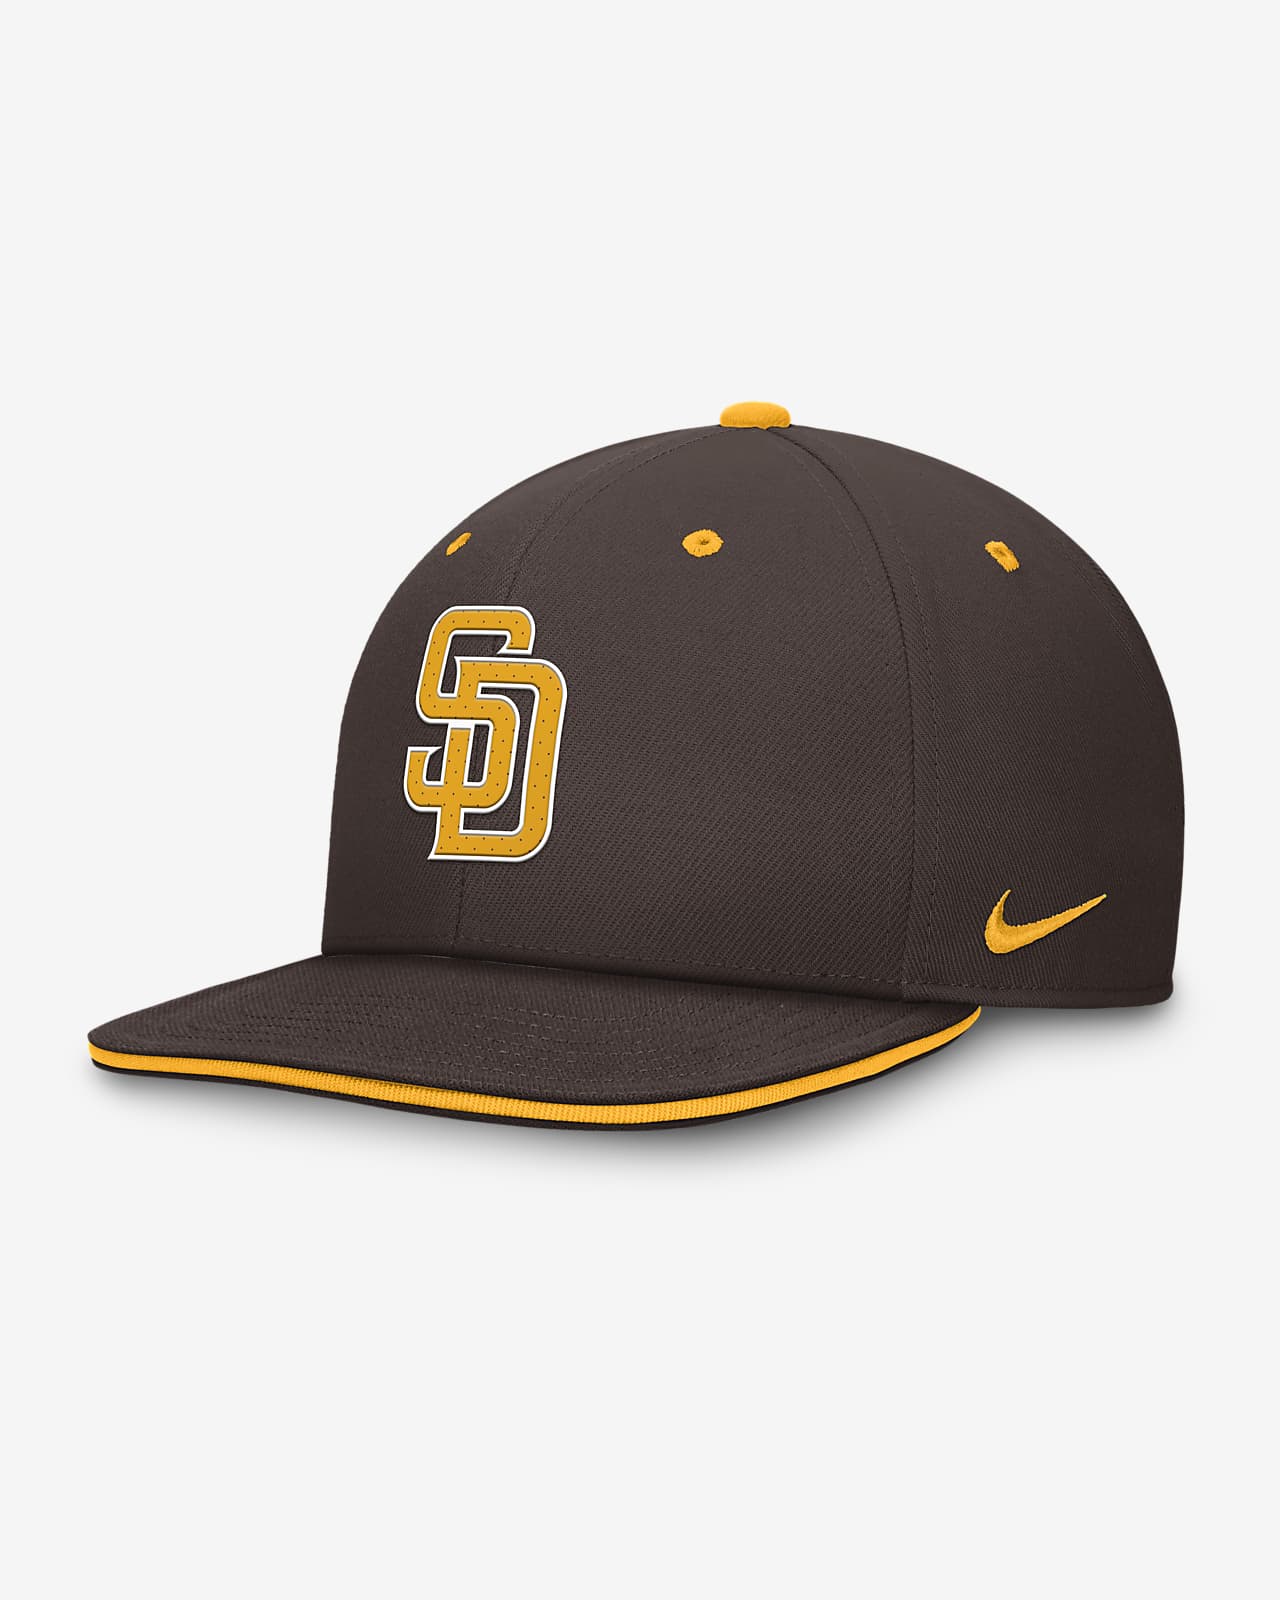 Gorra Nike Dri-FIT de la MLB ajustable para hombre San Diego Padres Primetime Pro